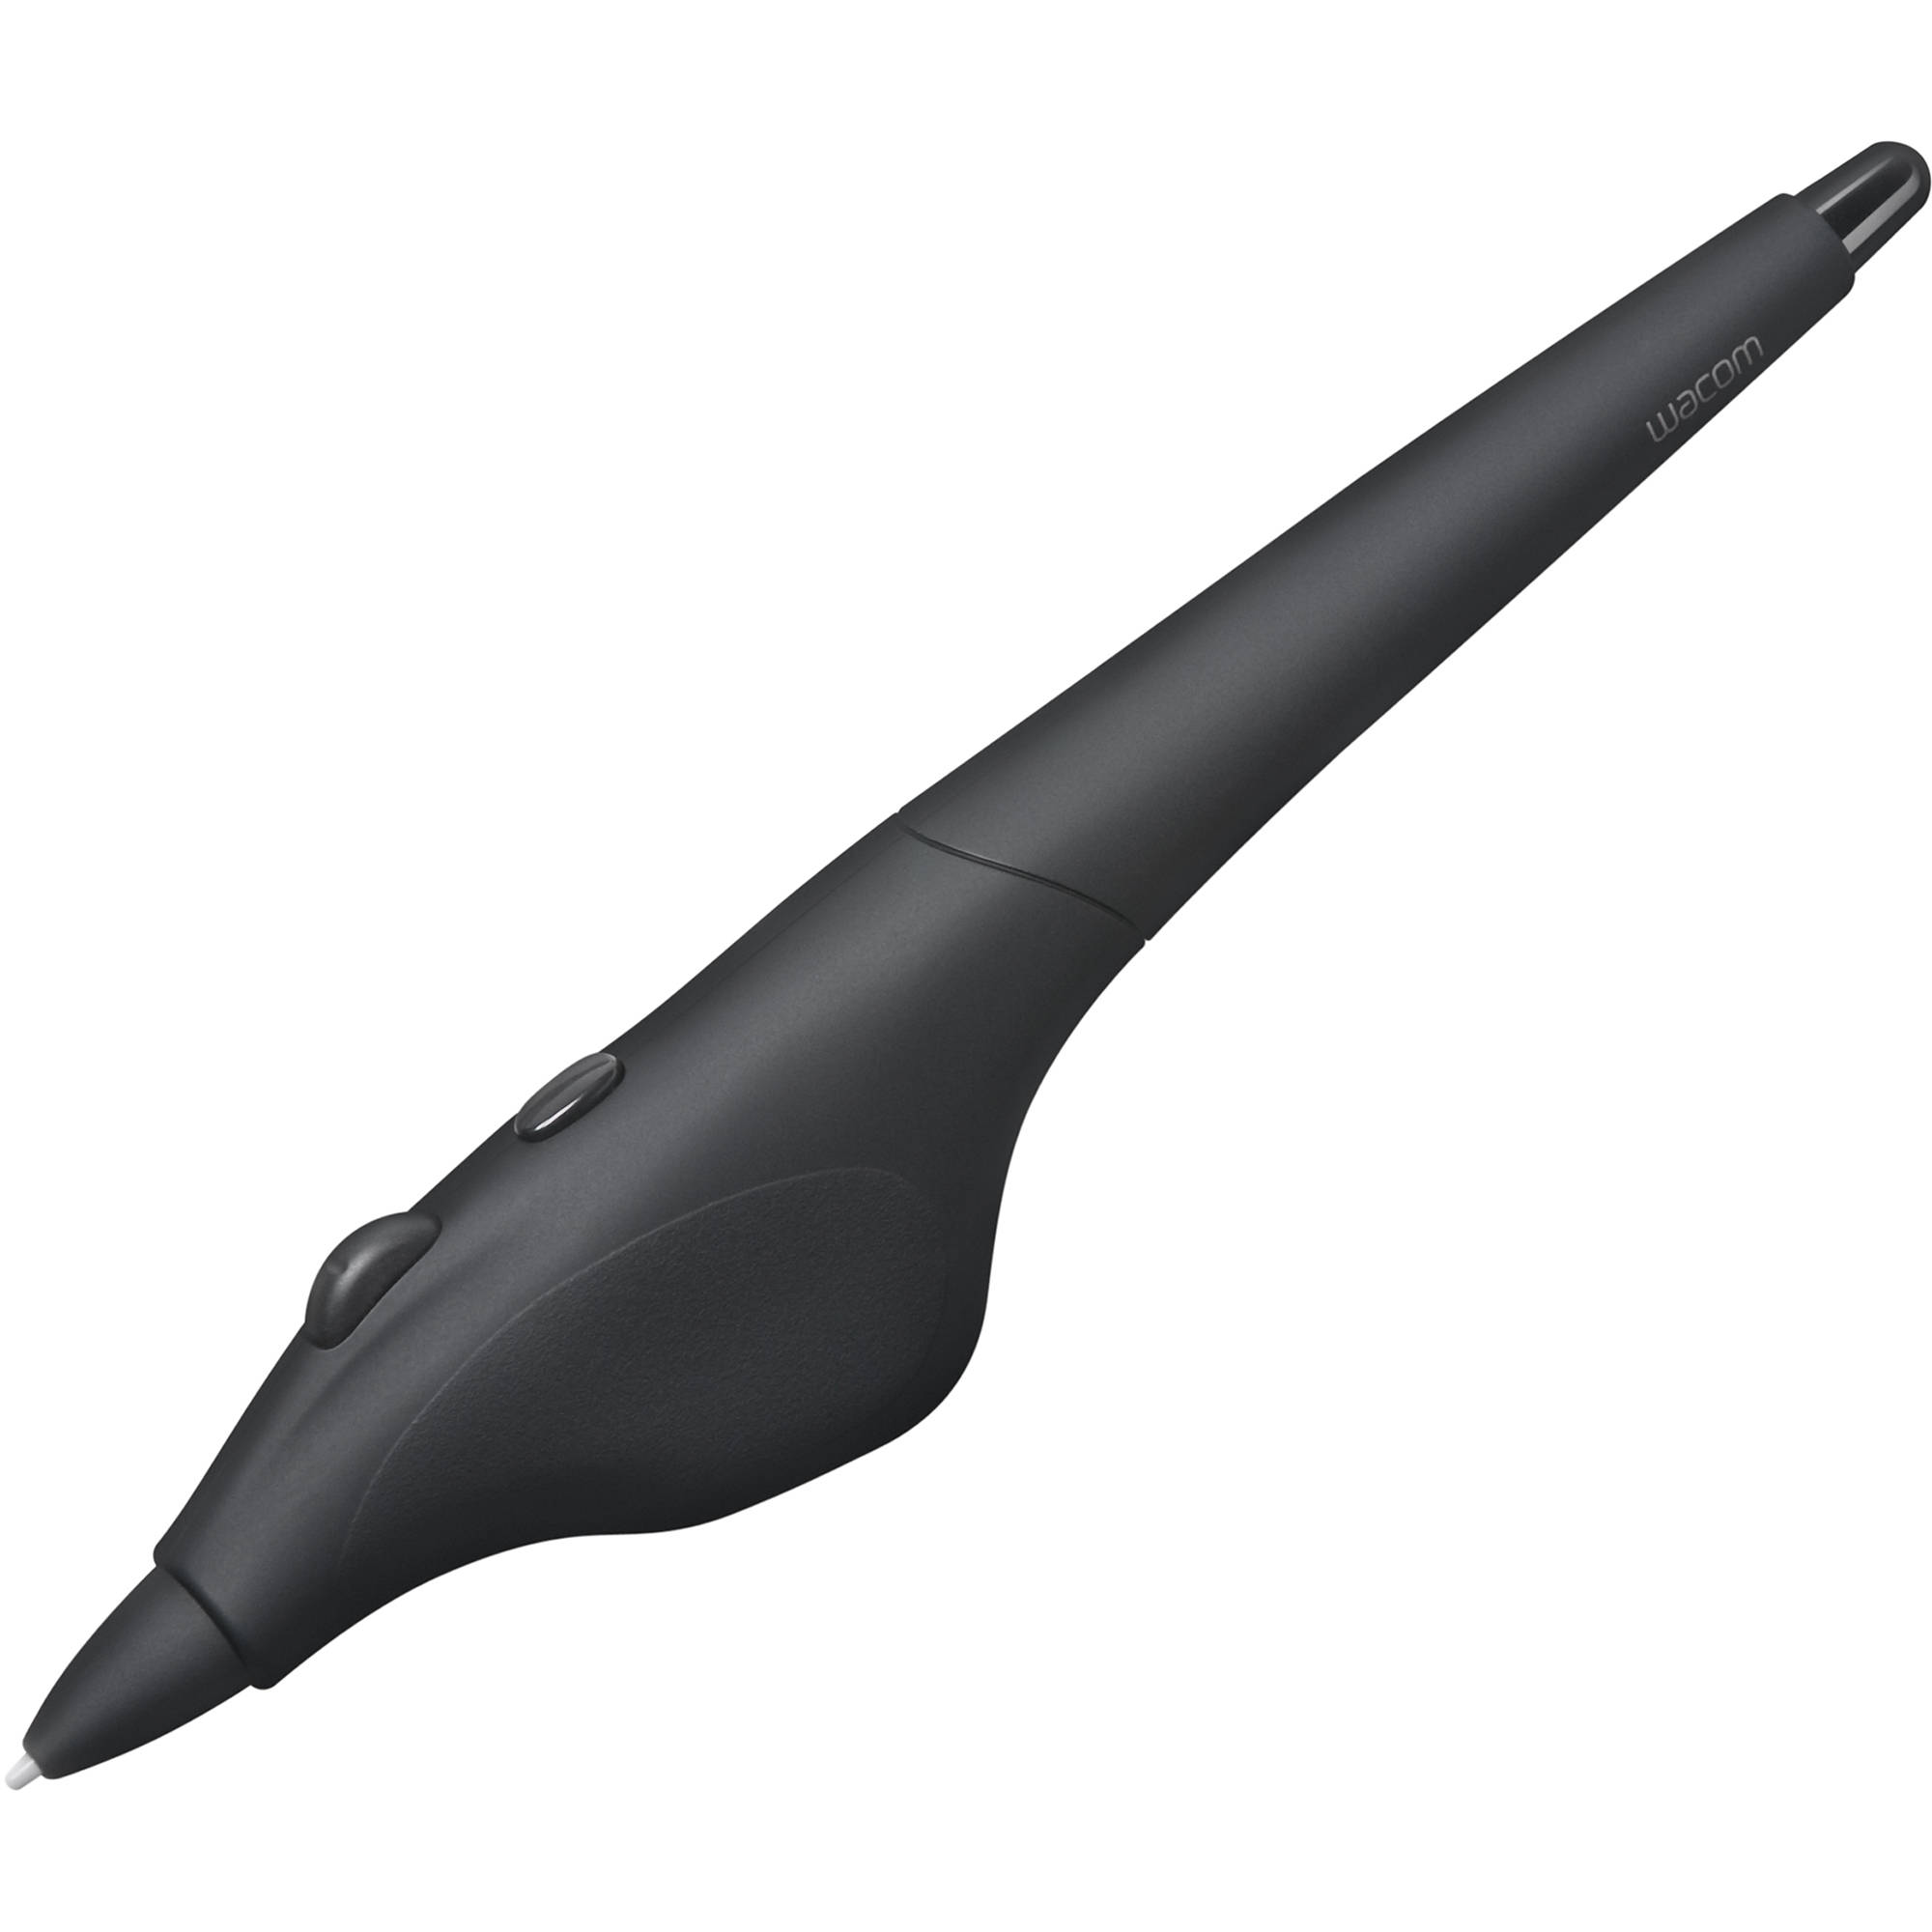 Аир браш. Перо Airbrush Pen (kp400e). Стилус Wacom Finetip Pen. Перо Wacom Finetip Pen.